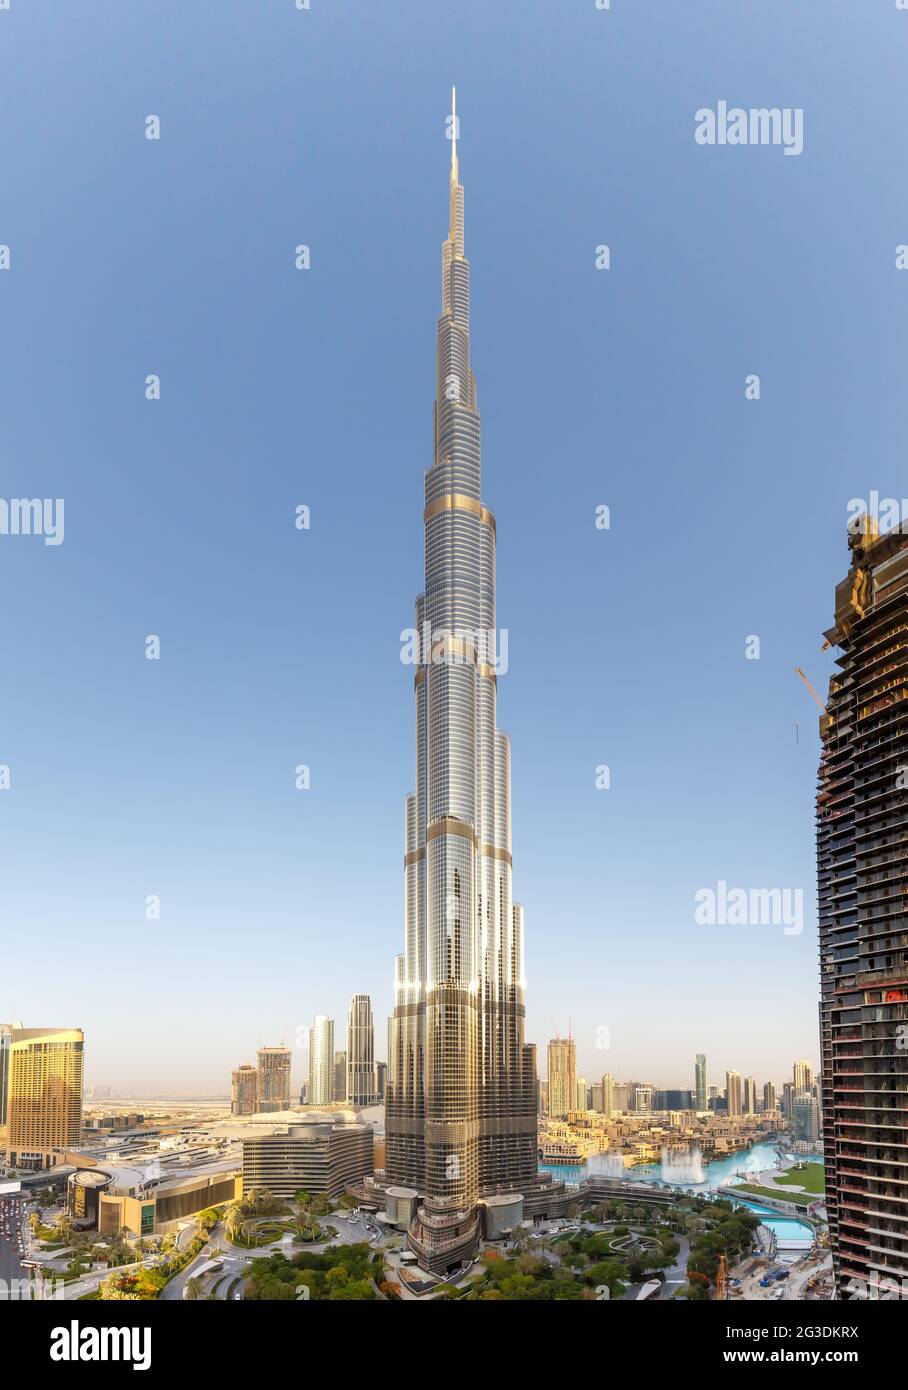 Dubai Burj Khalifa Kalifa skyscraper building skyline architecture in United Arab Emirates city Stock Photo